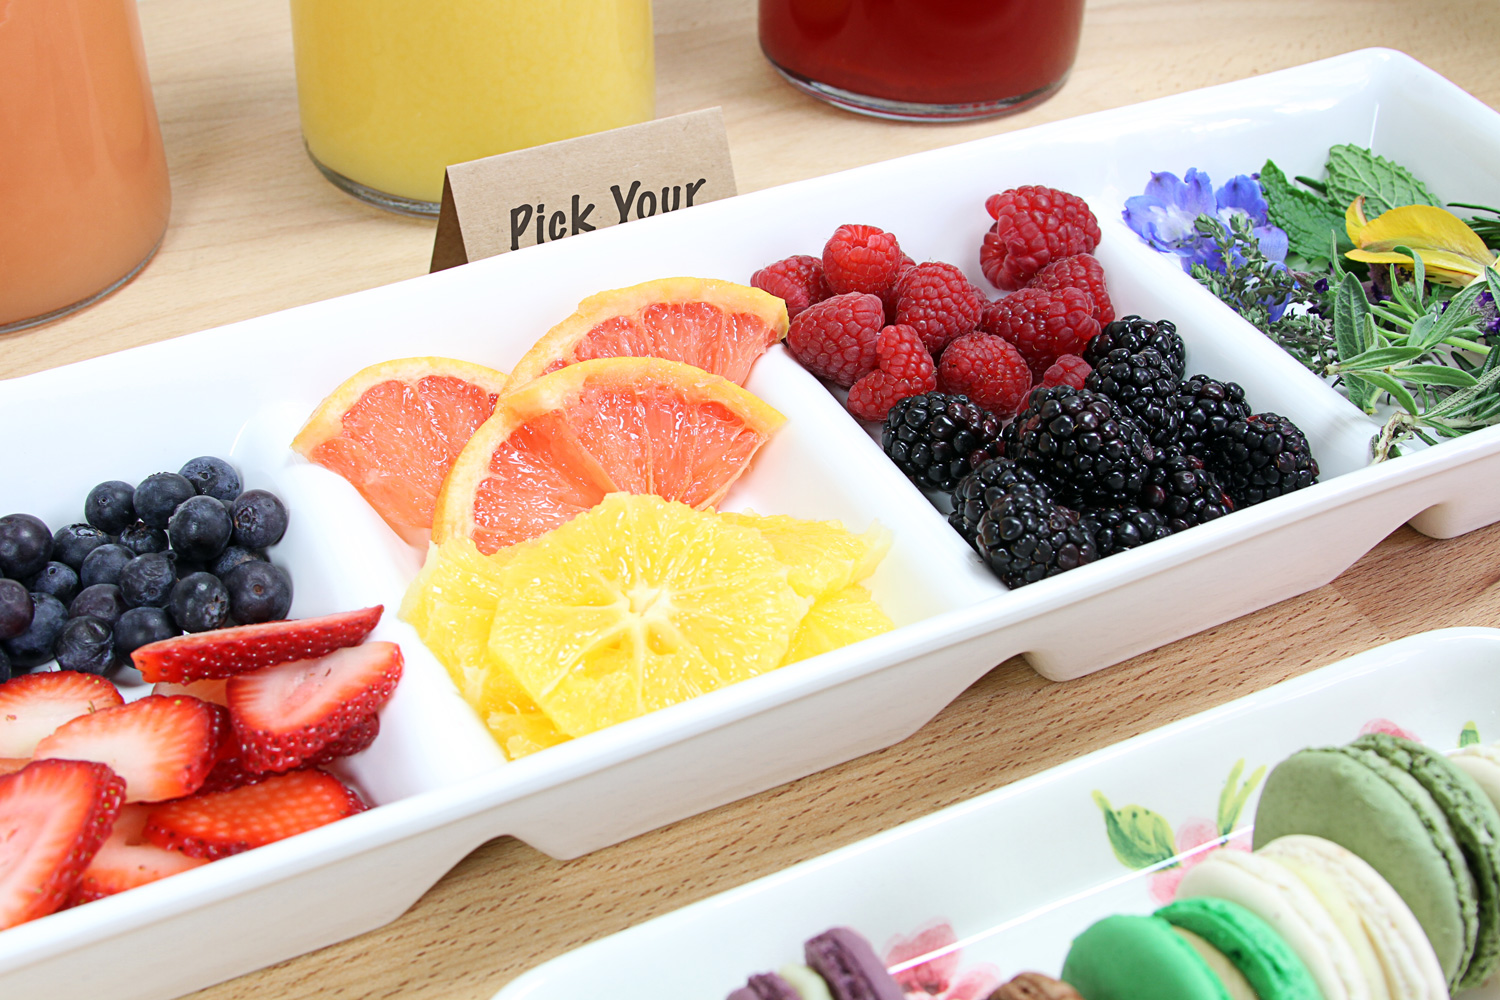 diy-mimosa-bar-styling-ideas-and-recipes-shari-s-berries-blog